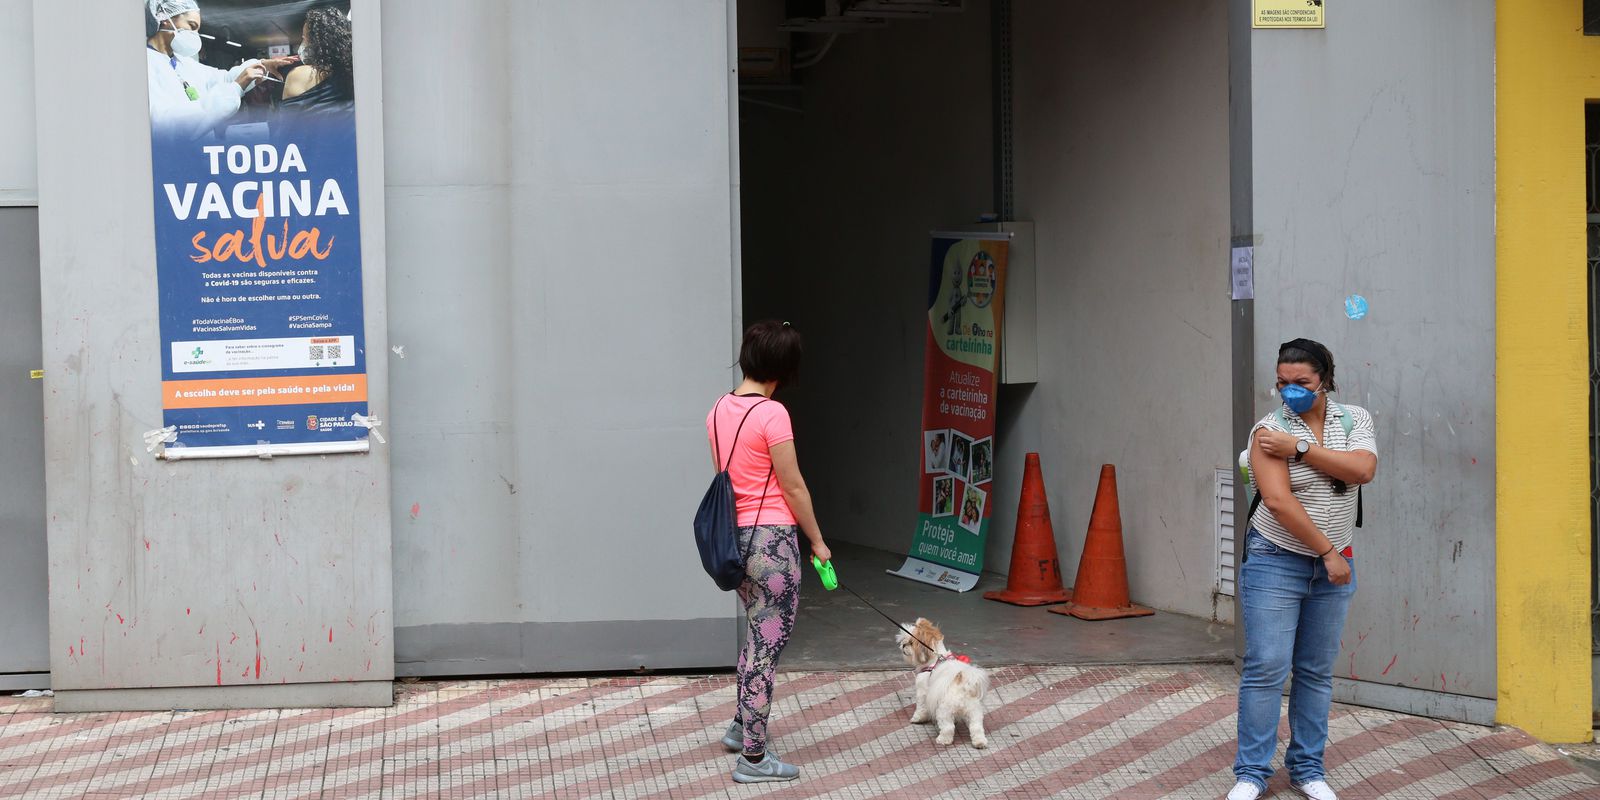 São Paulo has less than 40% of children vaccinated against flu